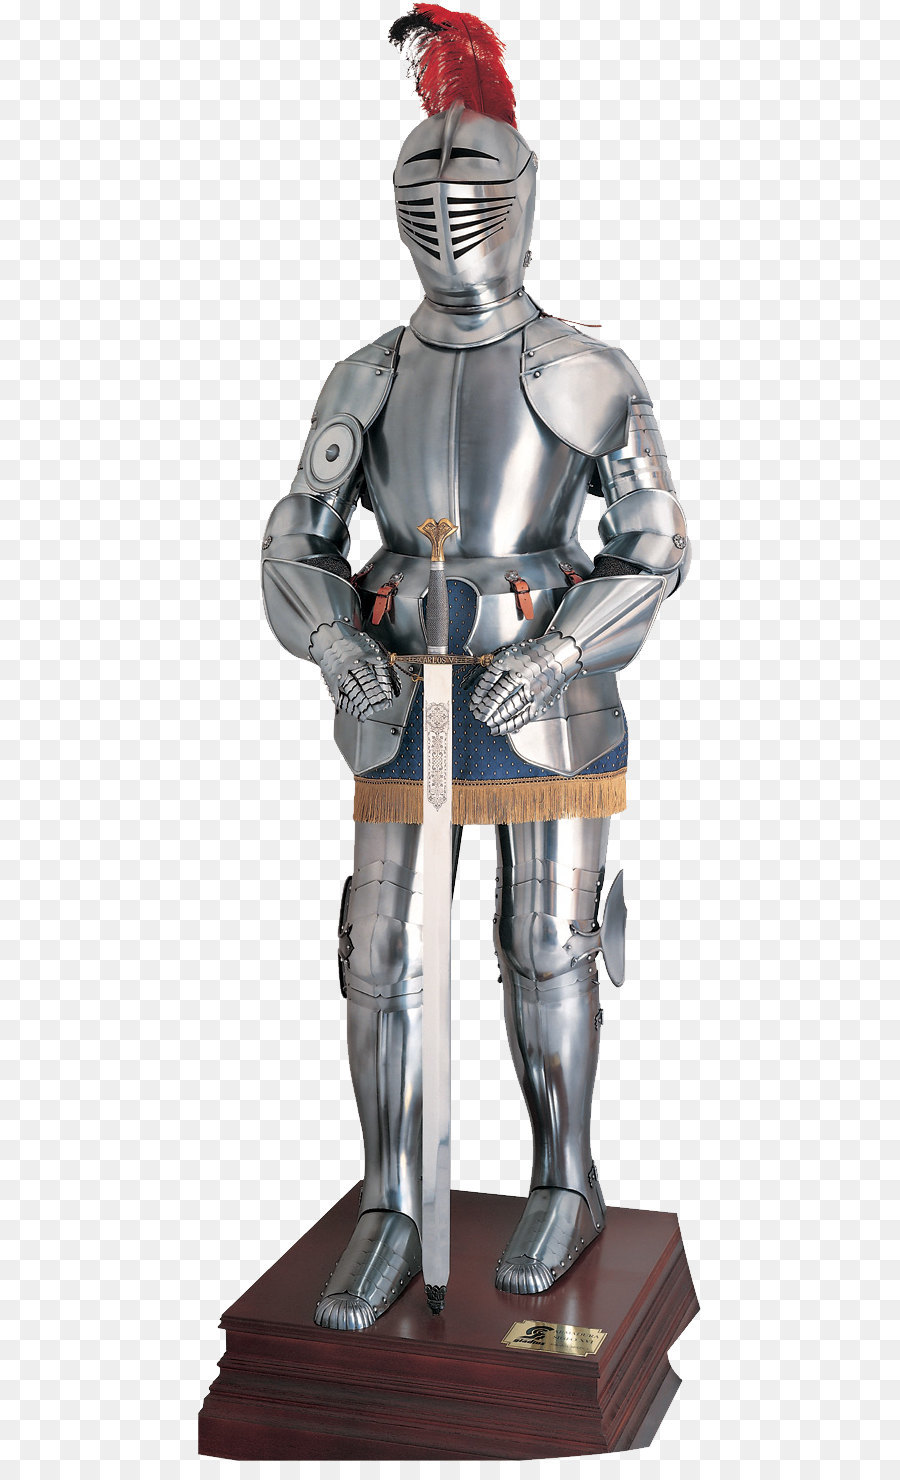 L'armatura armatura Medioevo Cavaliere - cavaliere armatura PNG